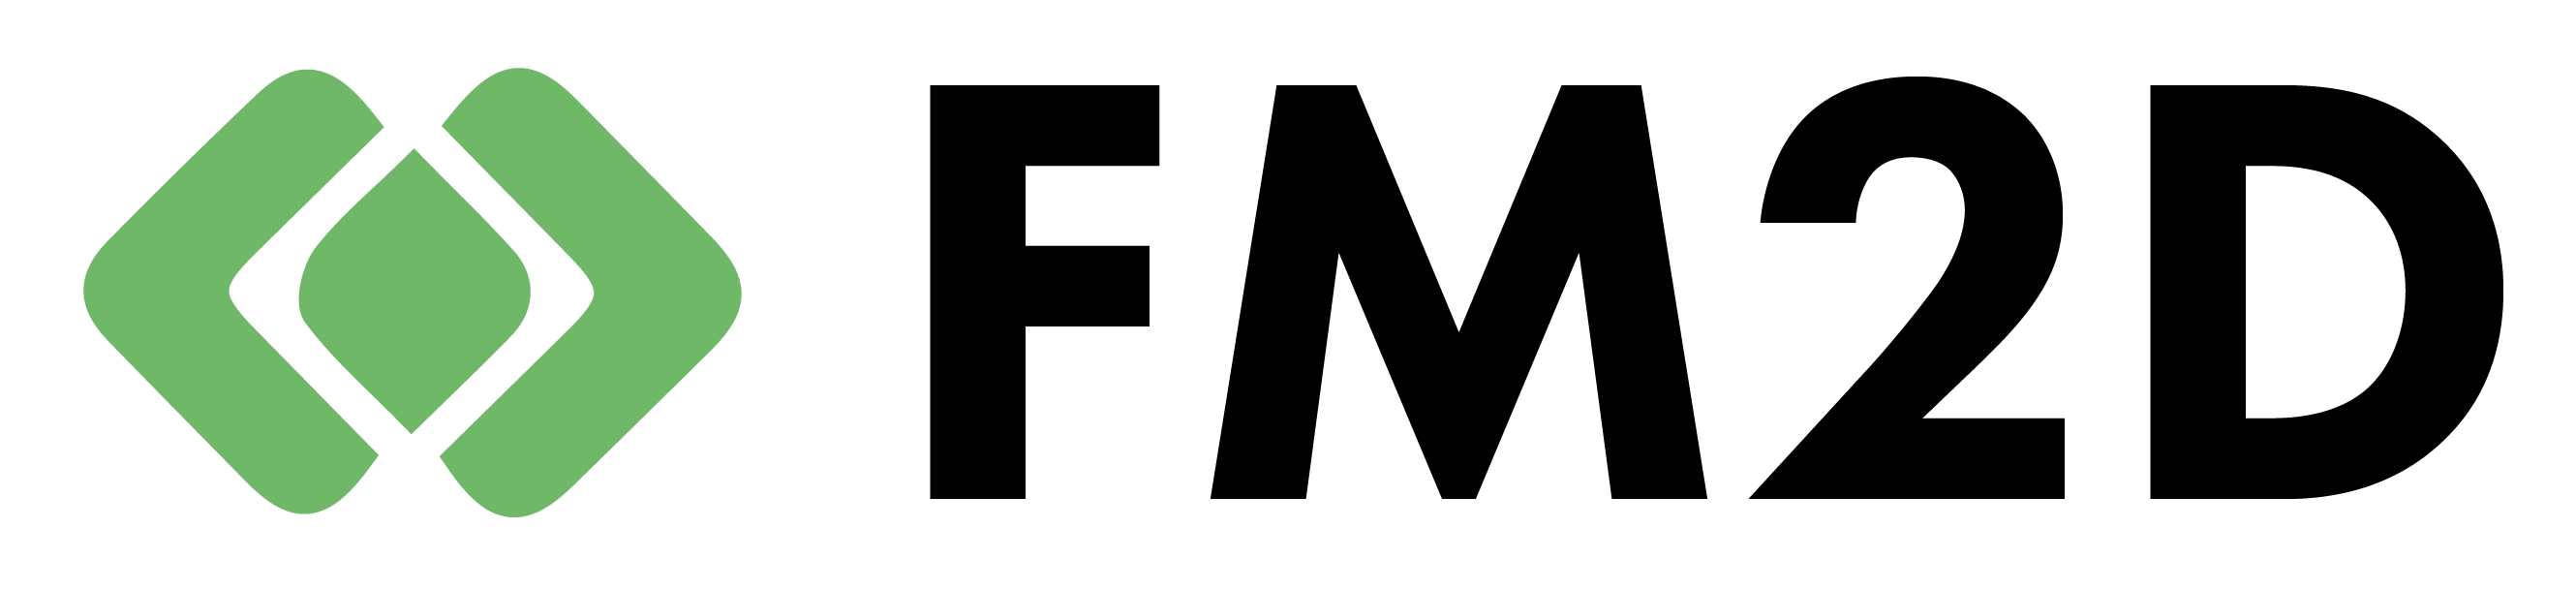 FM2D logo